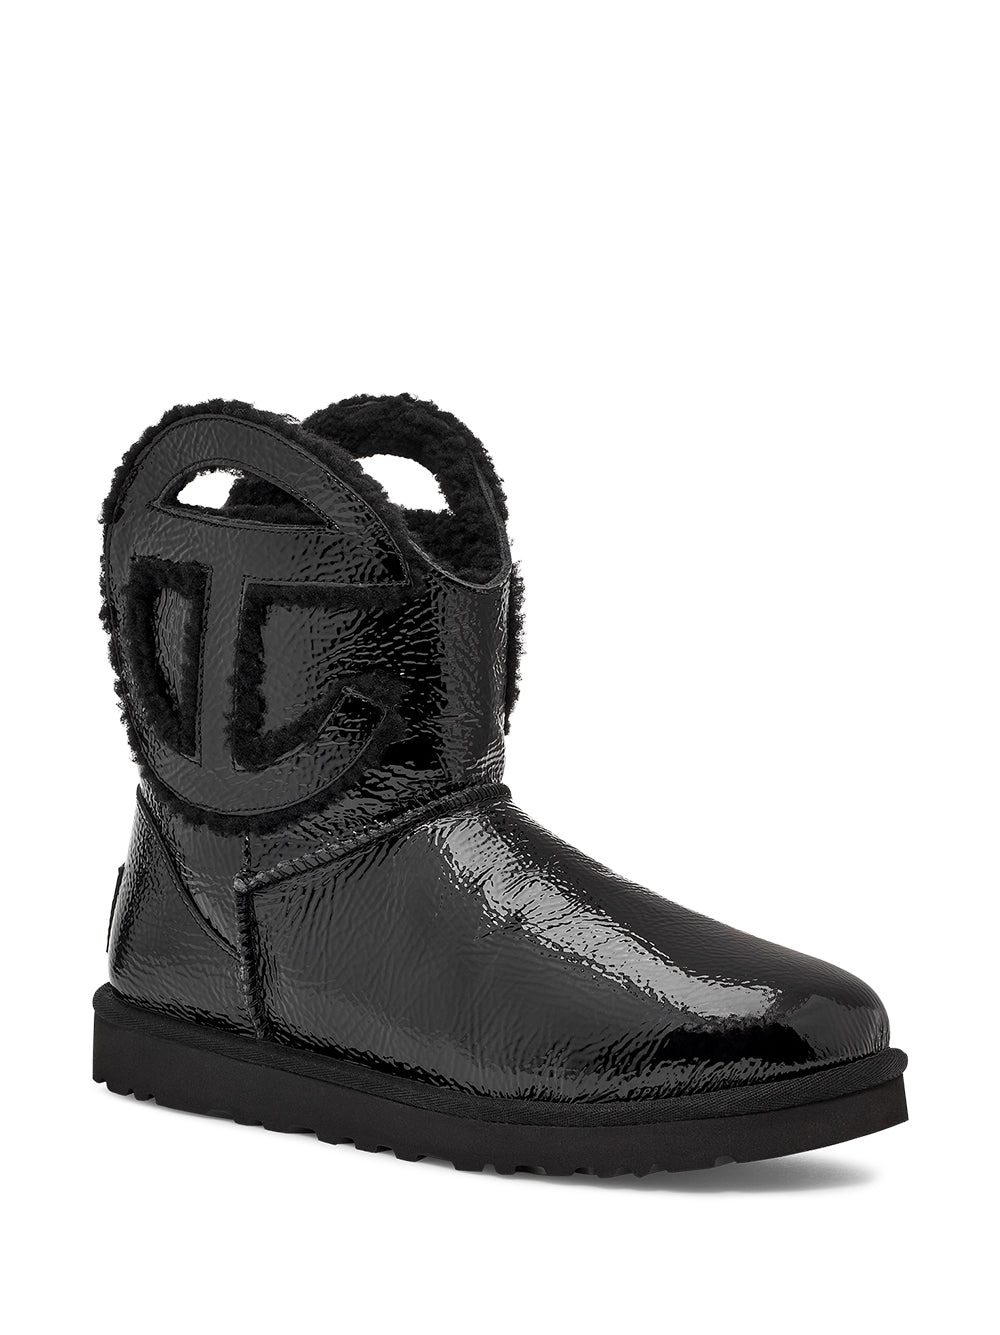 Ugg X Telfar Boots Black